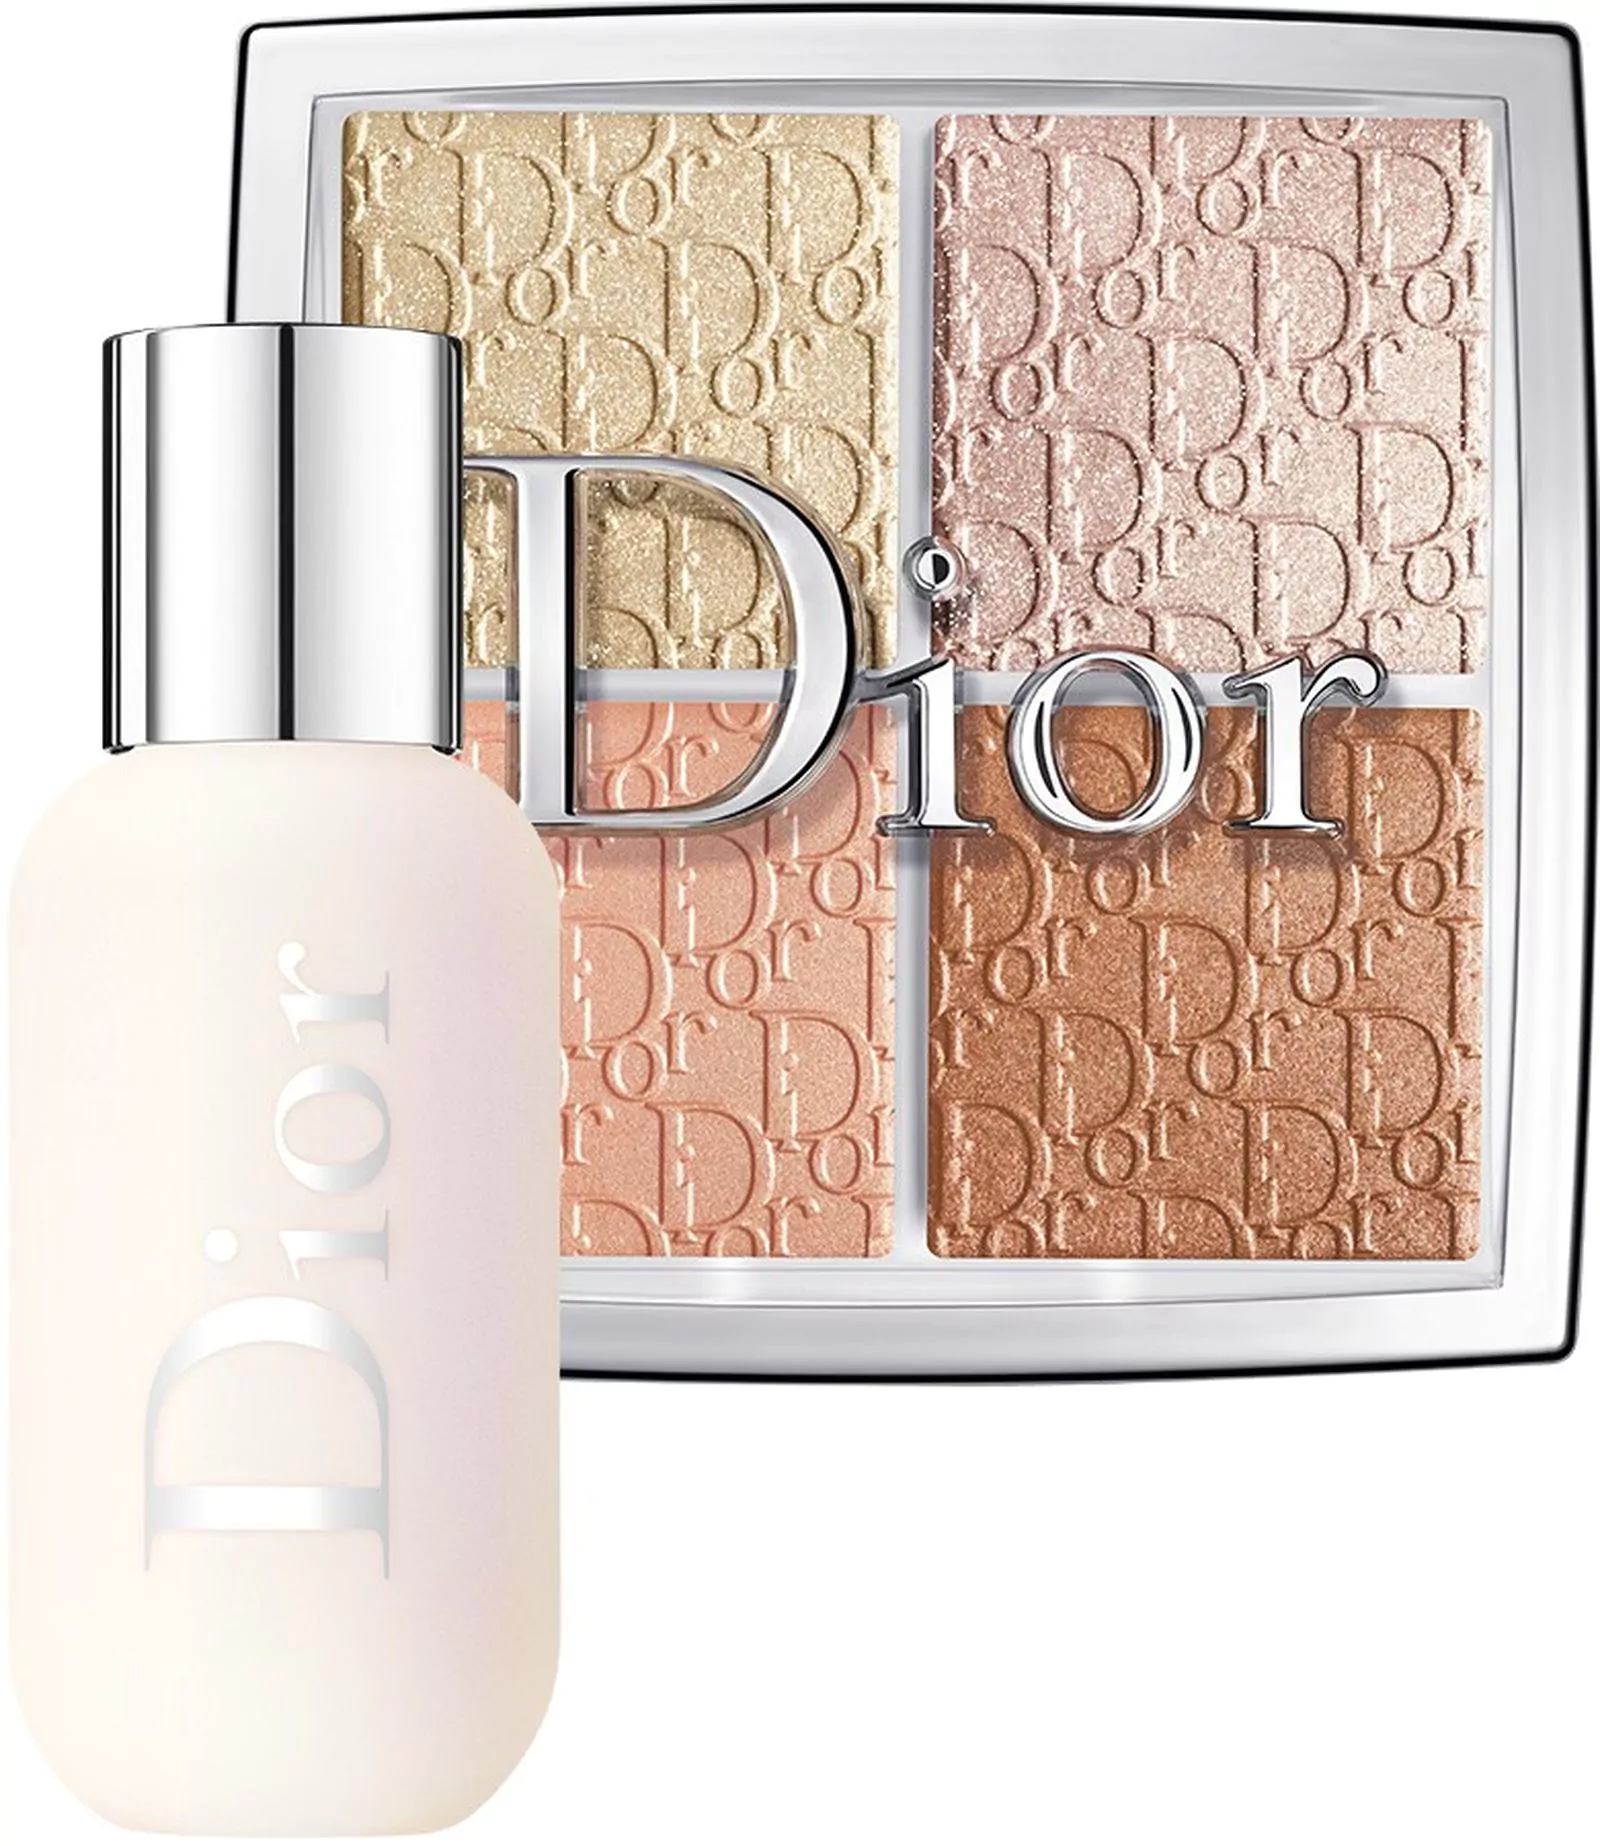 Dior Backstage Face and Body Primer, Dior Backstage Glow Palette